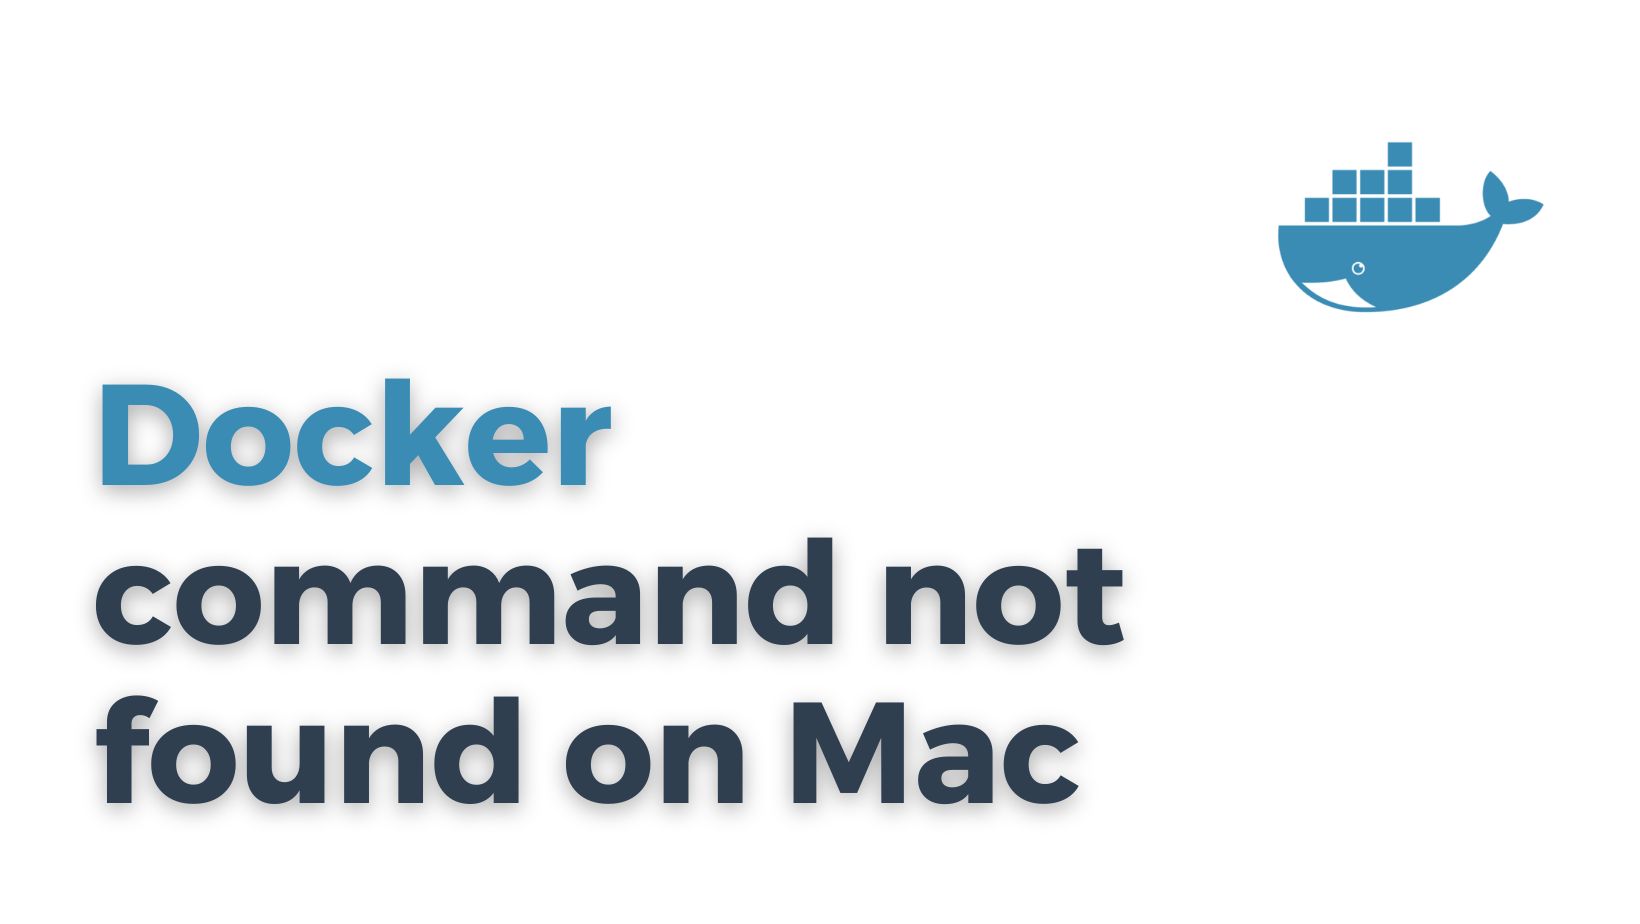 Docker command not found on Mac